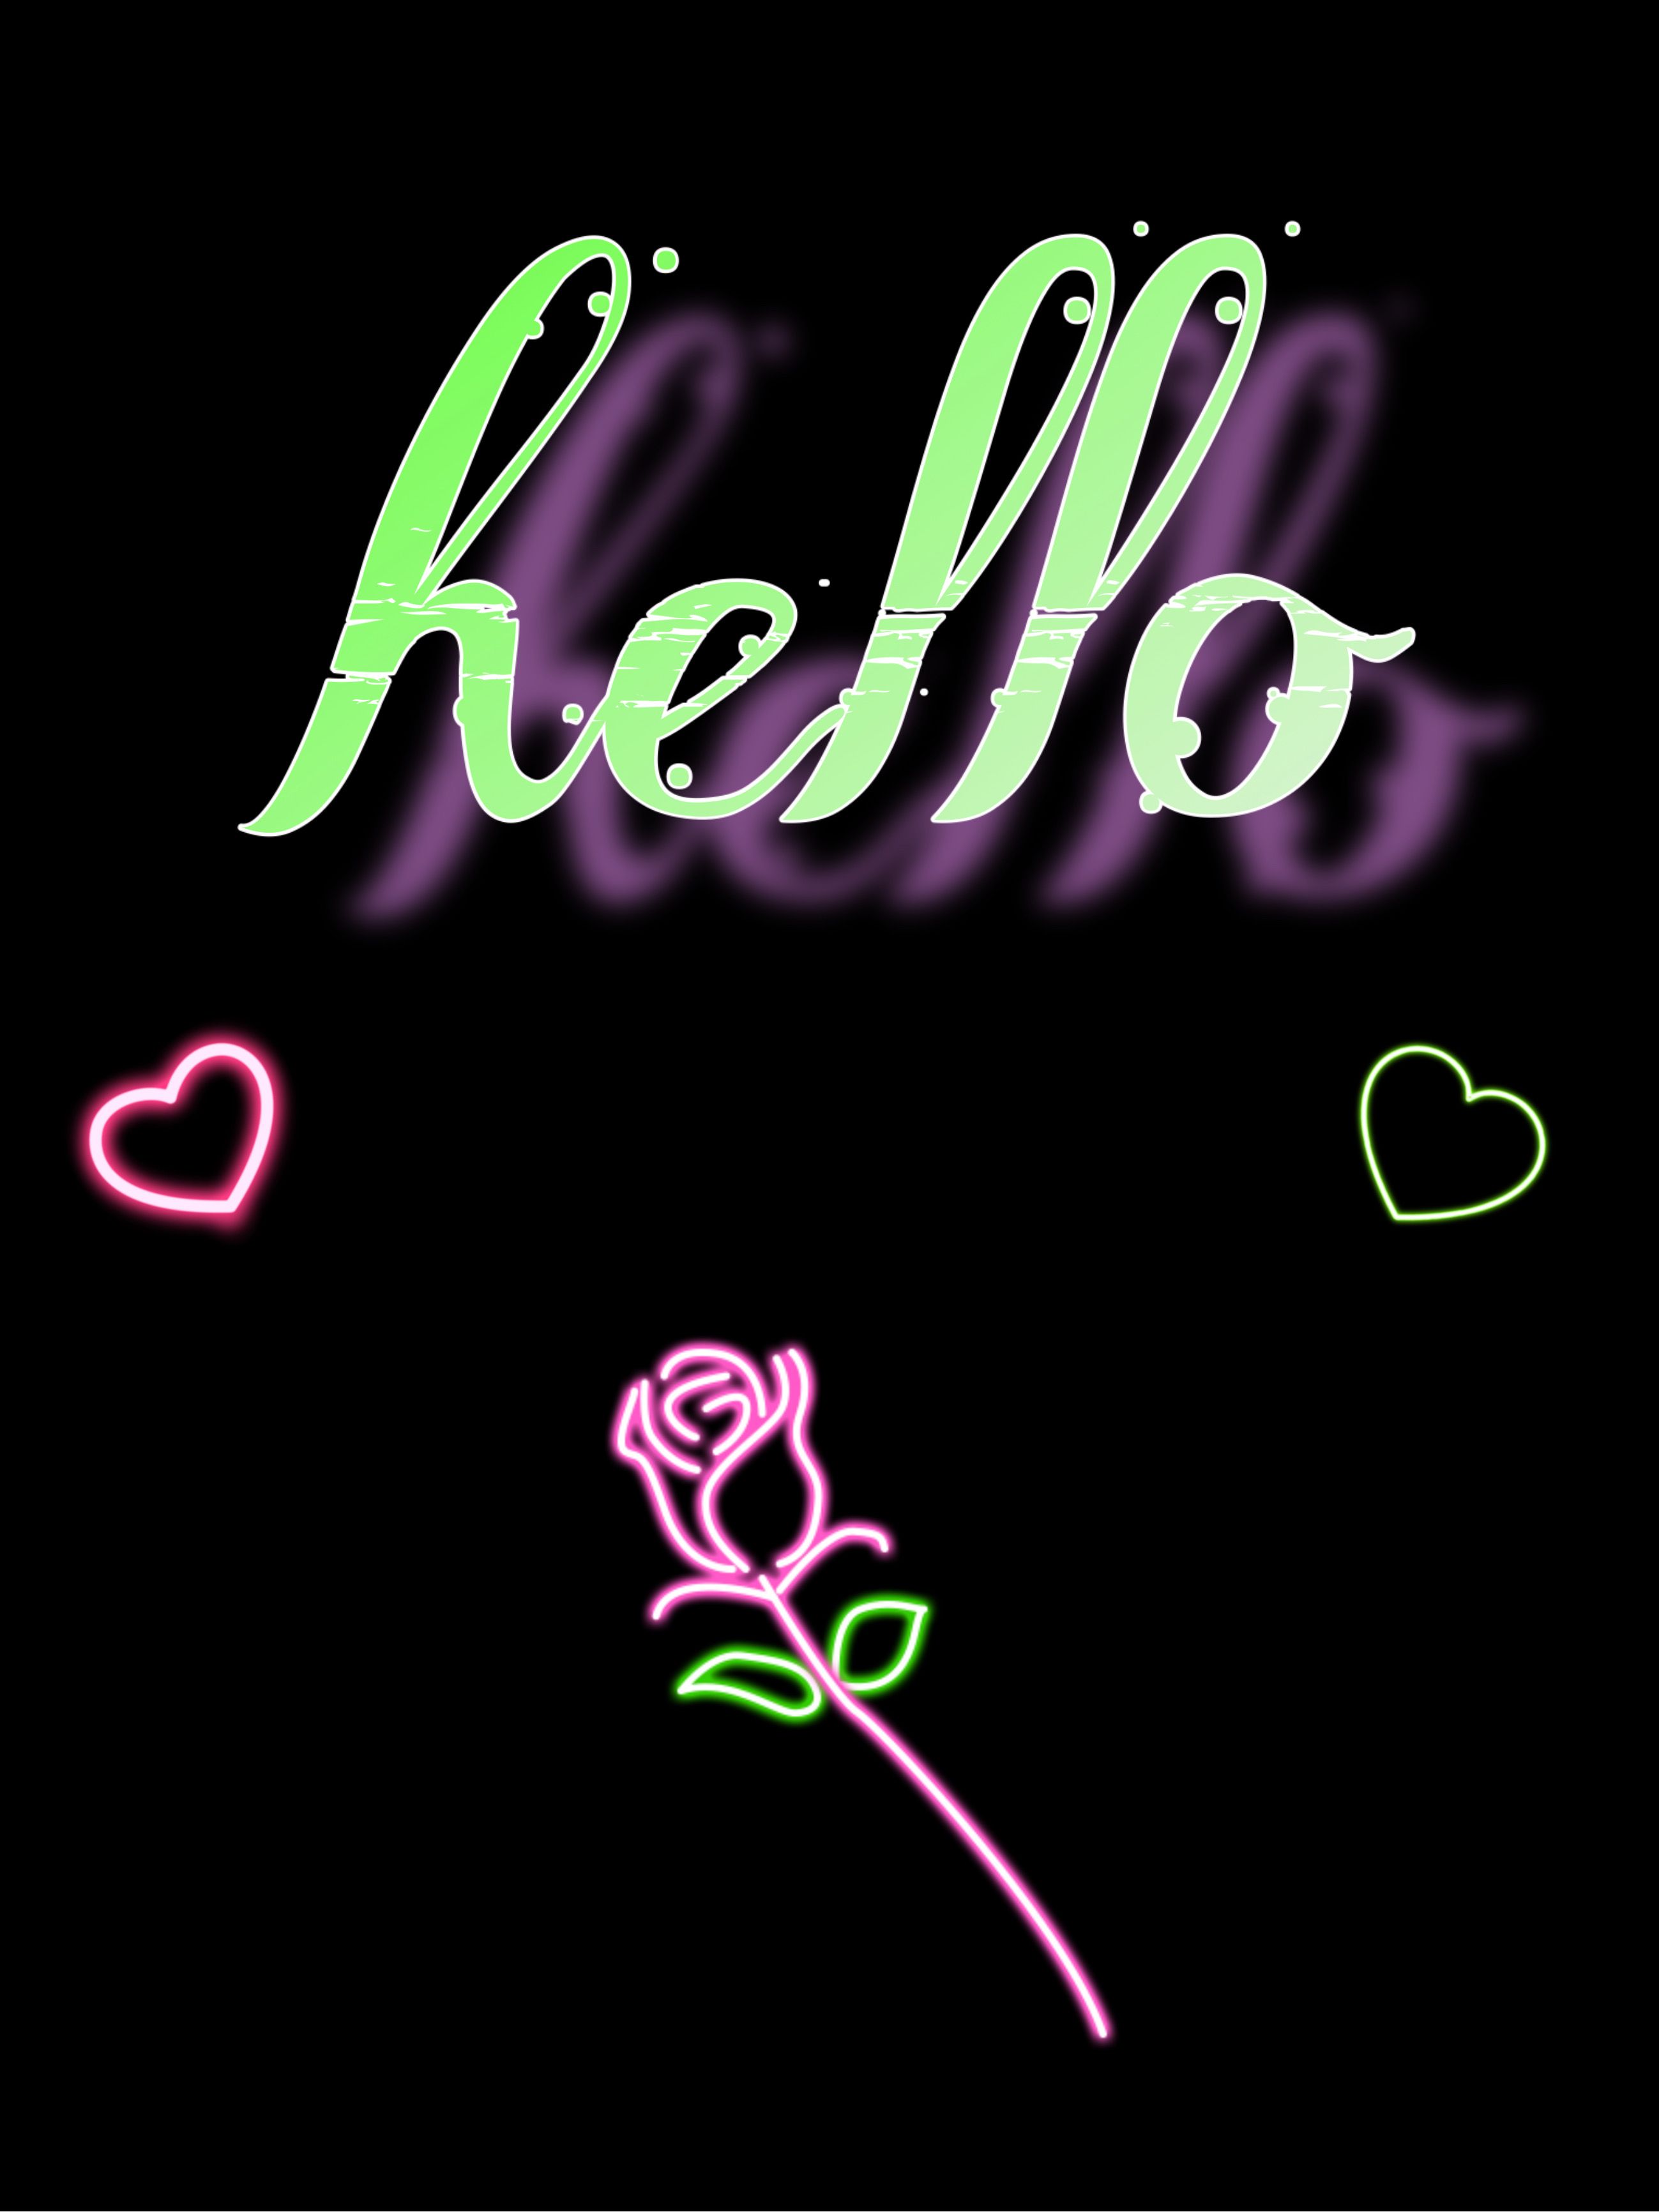 freetoedit #hello #wallpaper #neon #rose #pink #green Design Wallpaper & Background Download